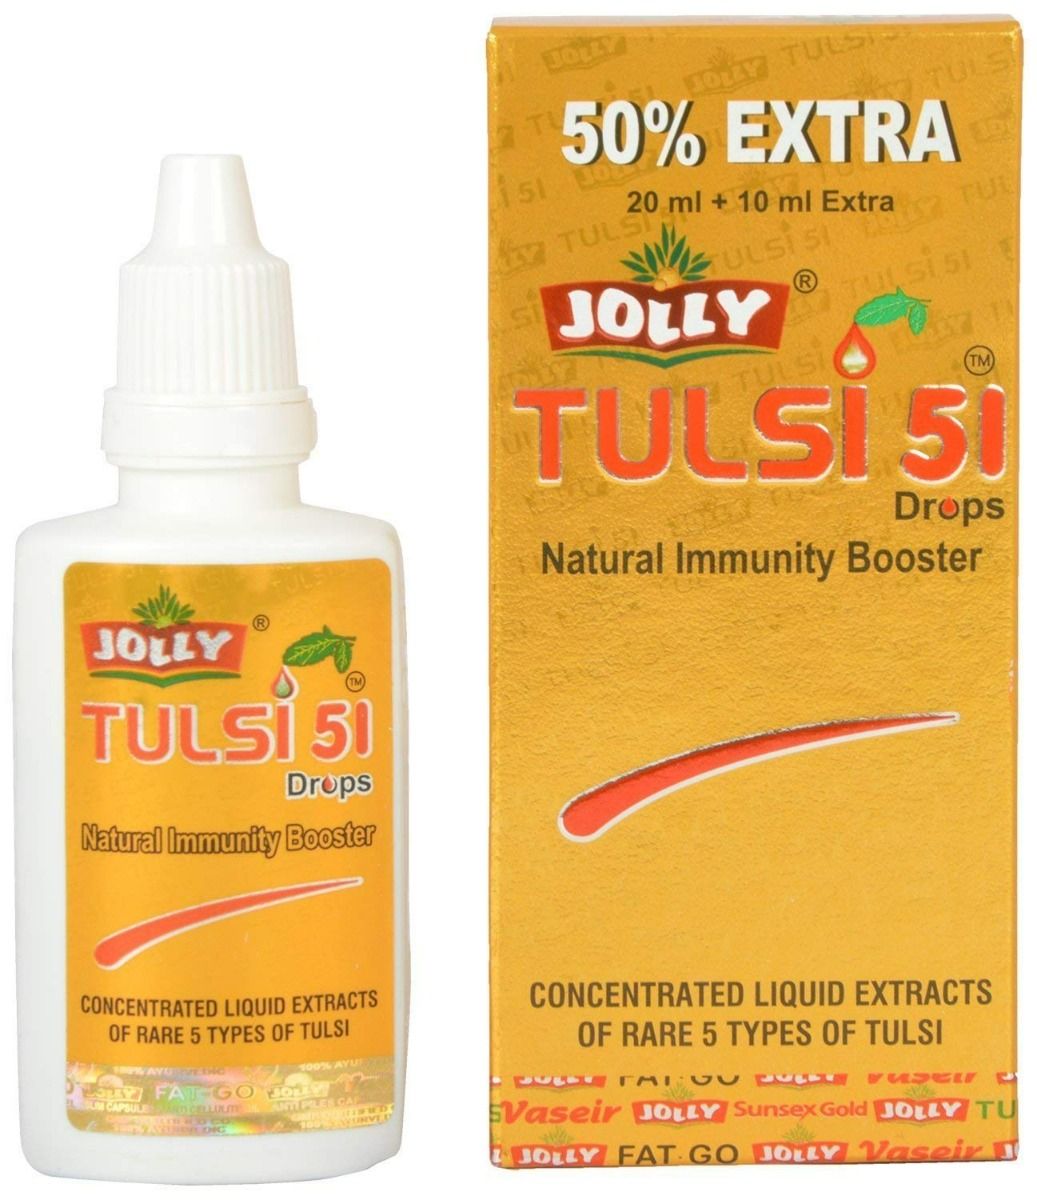 Buy Jolly Tulsi 51 Drops, 30 ml Online